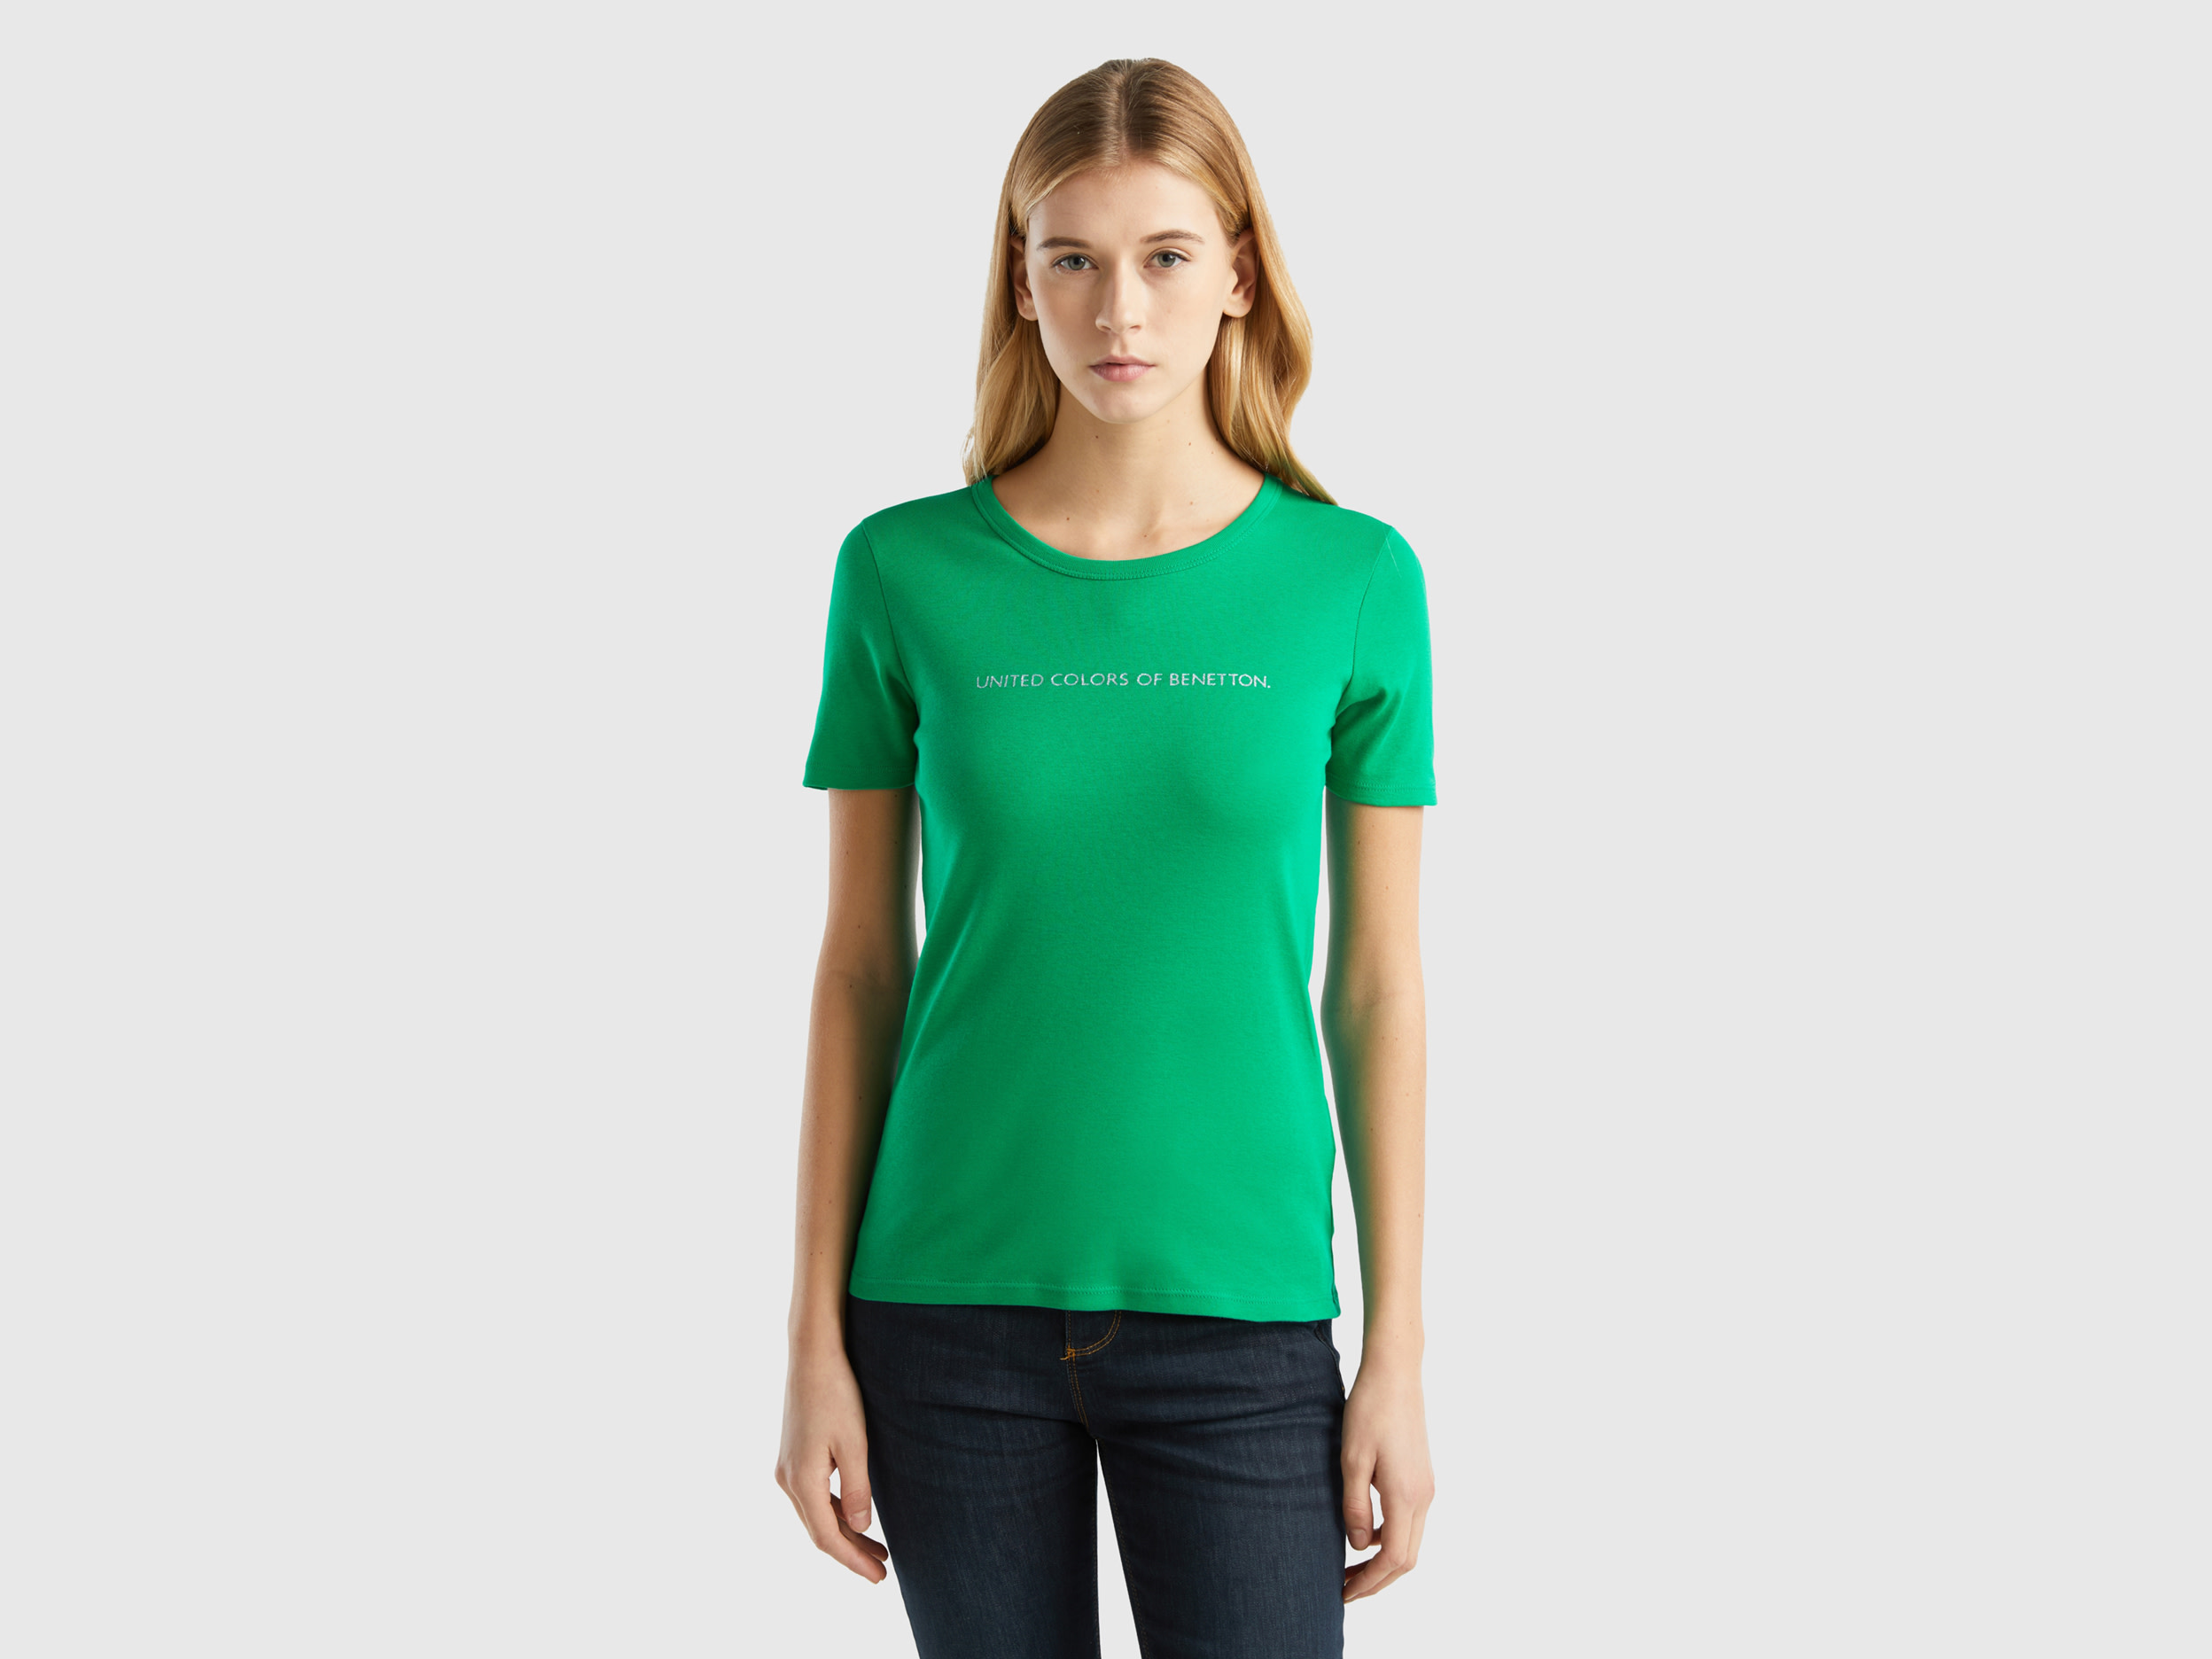 Benetton, T-shirt In 100% Cotton With Glitter Print Logo, size XL, Green, Women